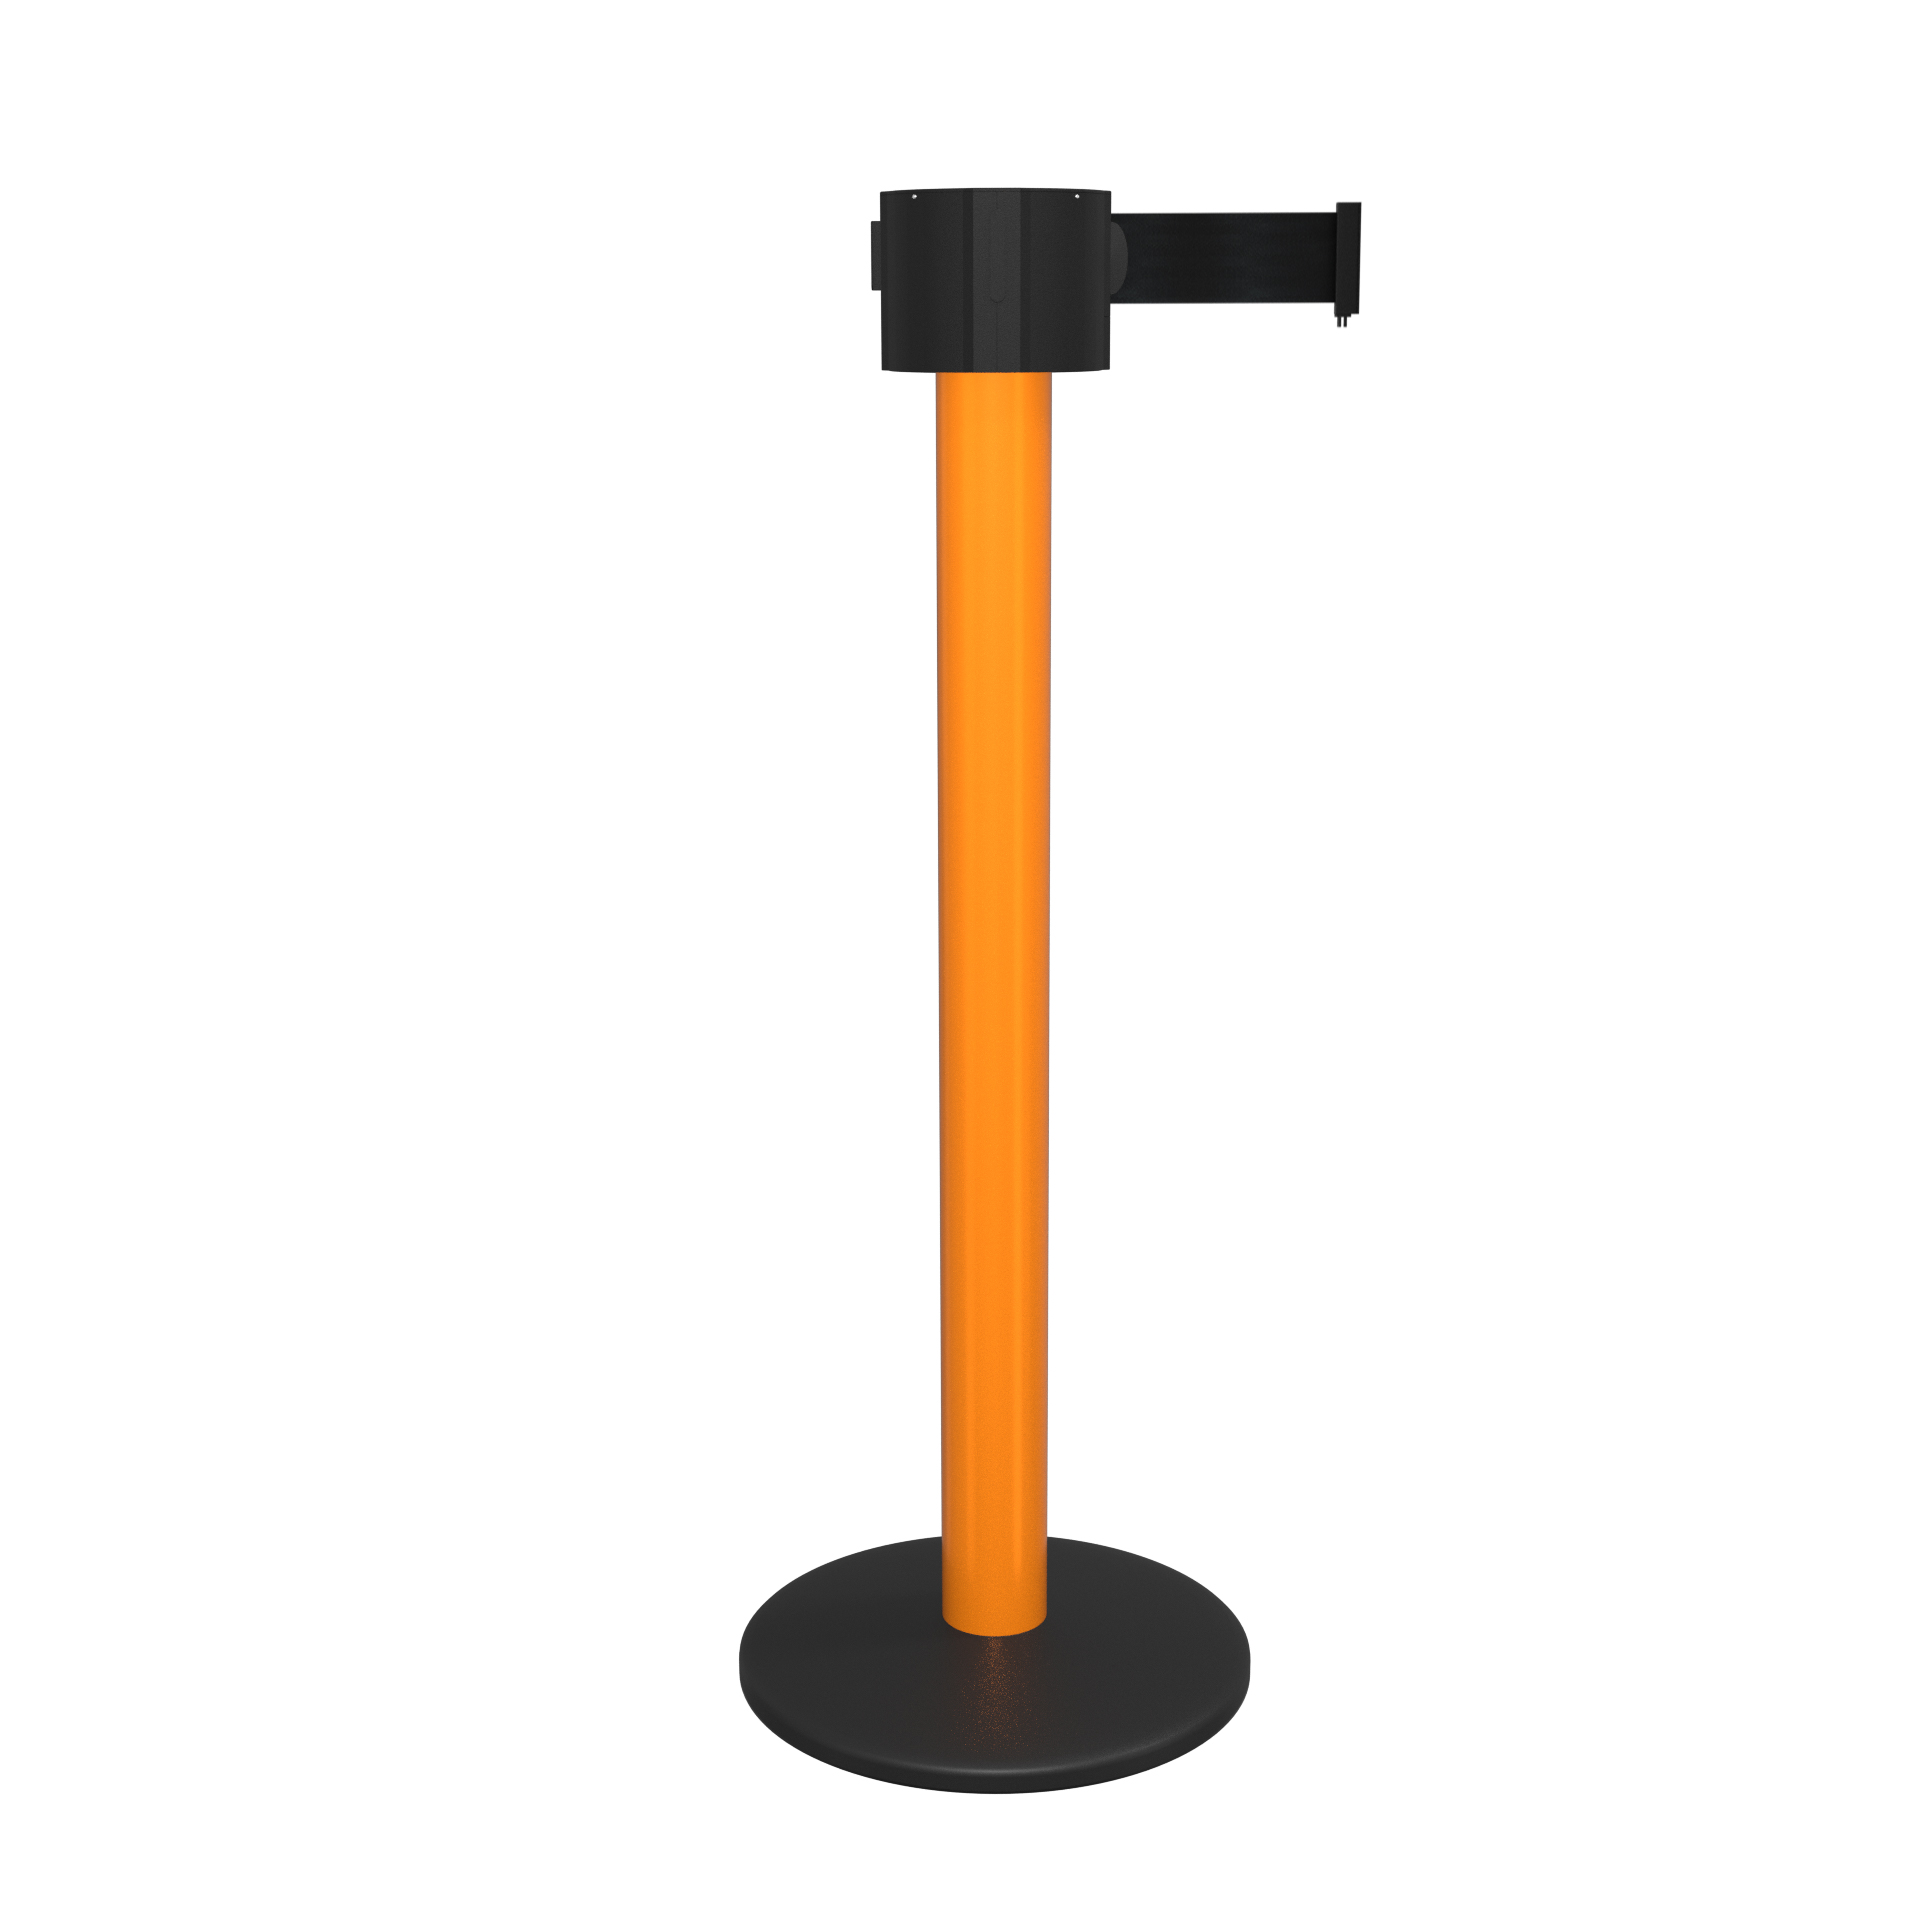 Orange SafetyPro 775 Retractable Belt Barrier